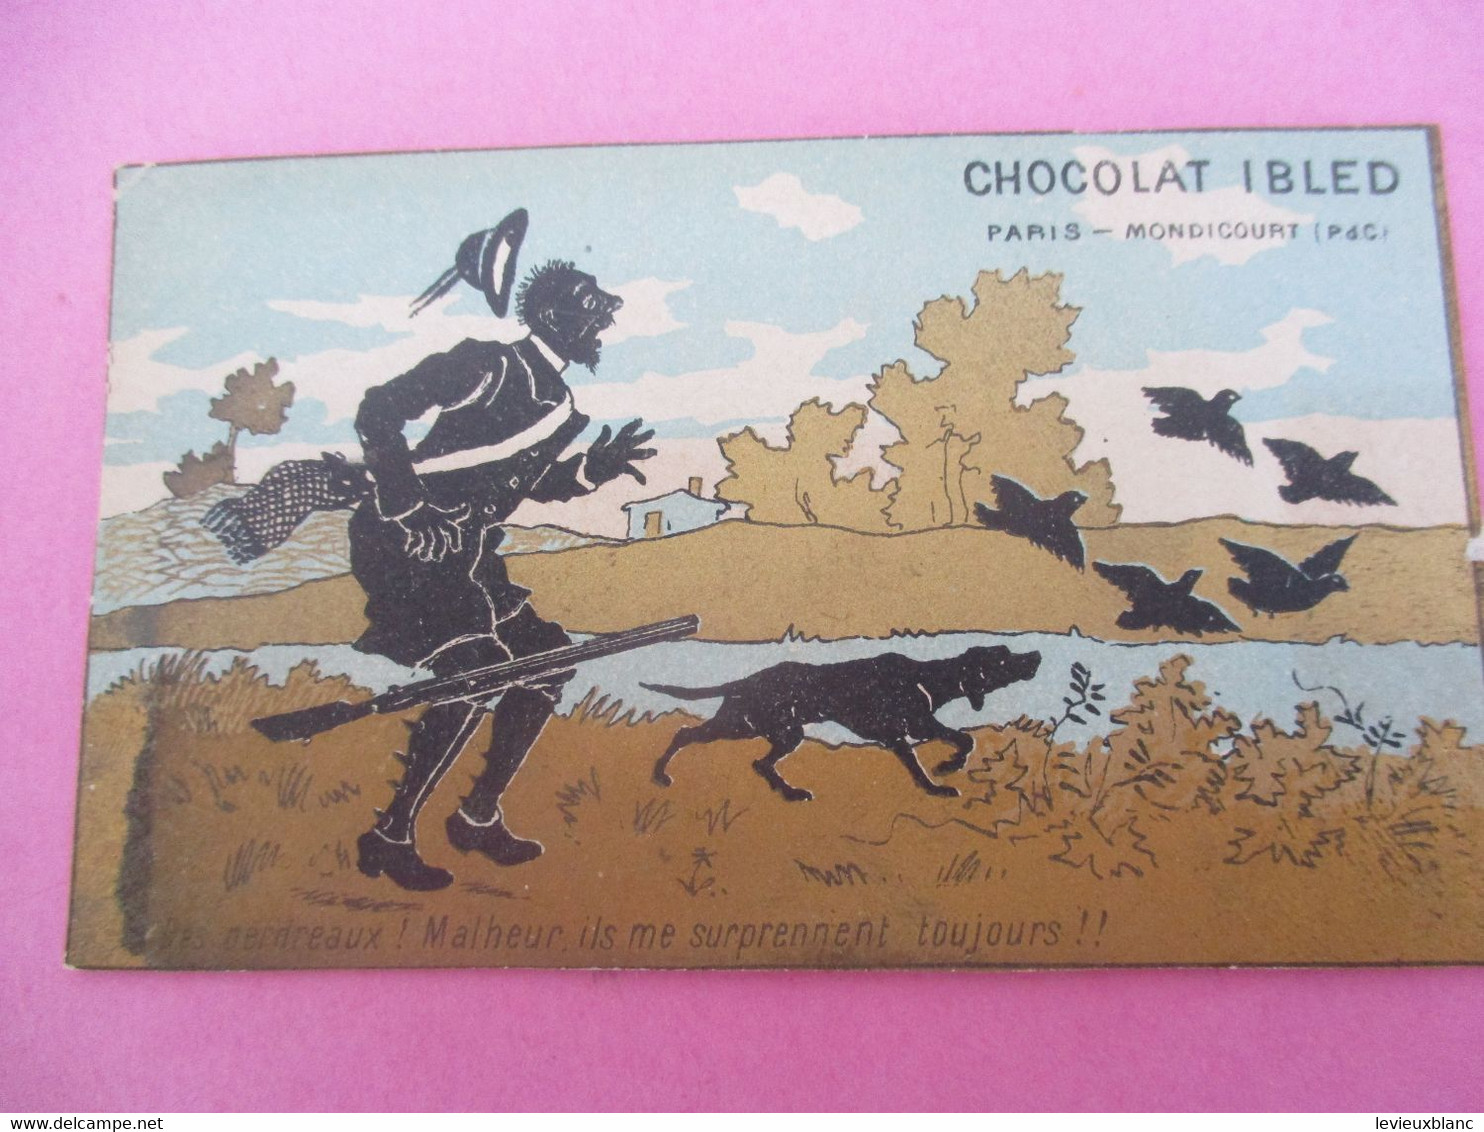 13  Chromos-dorés / CHOCOLAT IBLED/Paris  / MONDICOURT (P de C) /Images Humoristiques/ vers 1890     IMA563